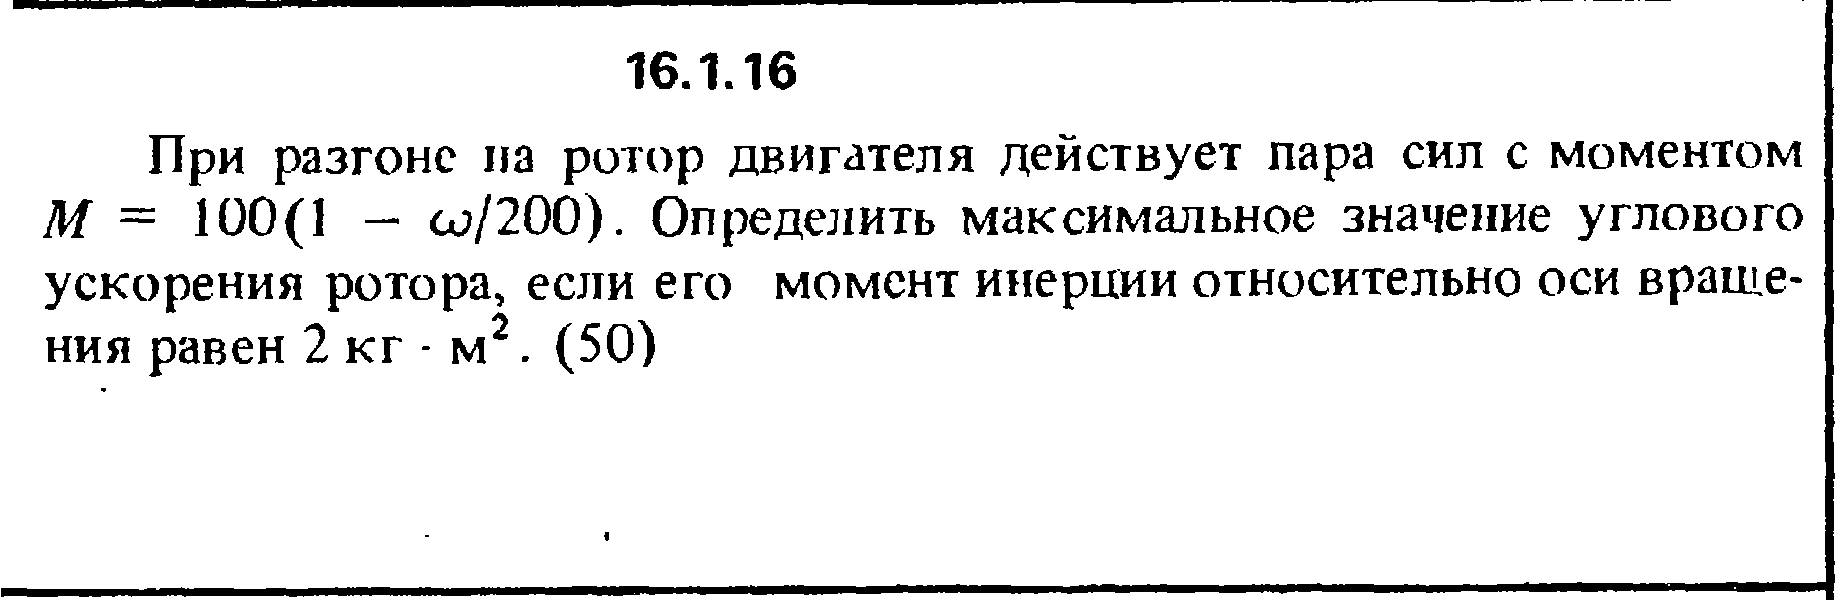 Решение задачи 16.1.16 из сборника Кепе О.Е. 1989 года